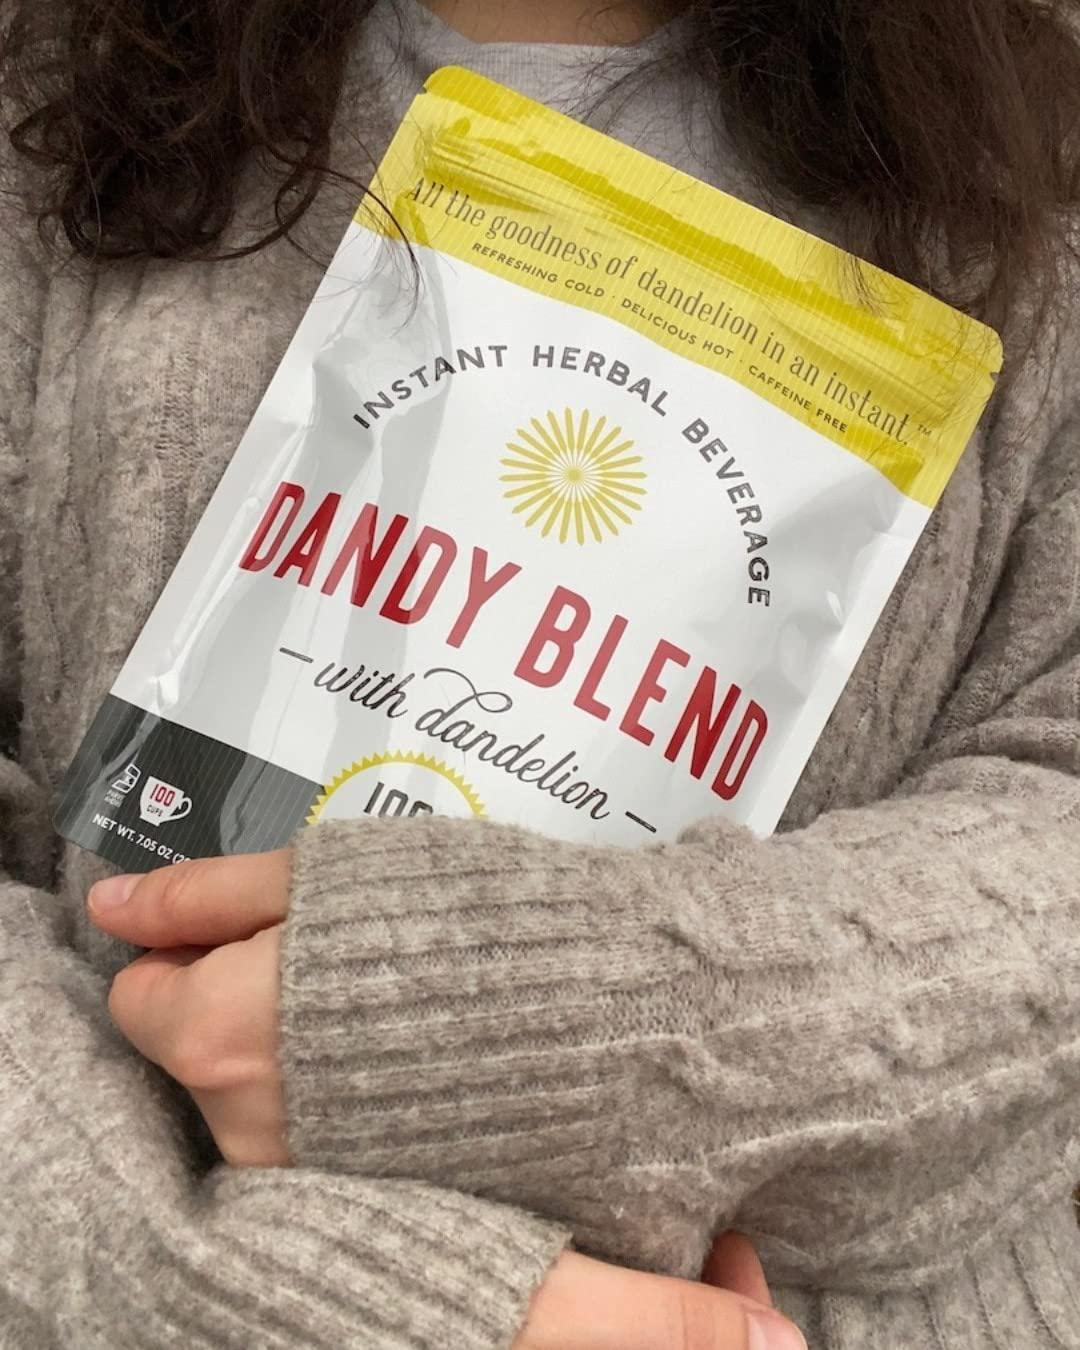 Dandy Blend Organic Instant Herbal Beverage with Dandelion - 3.53 oz bag